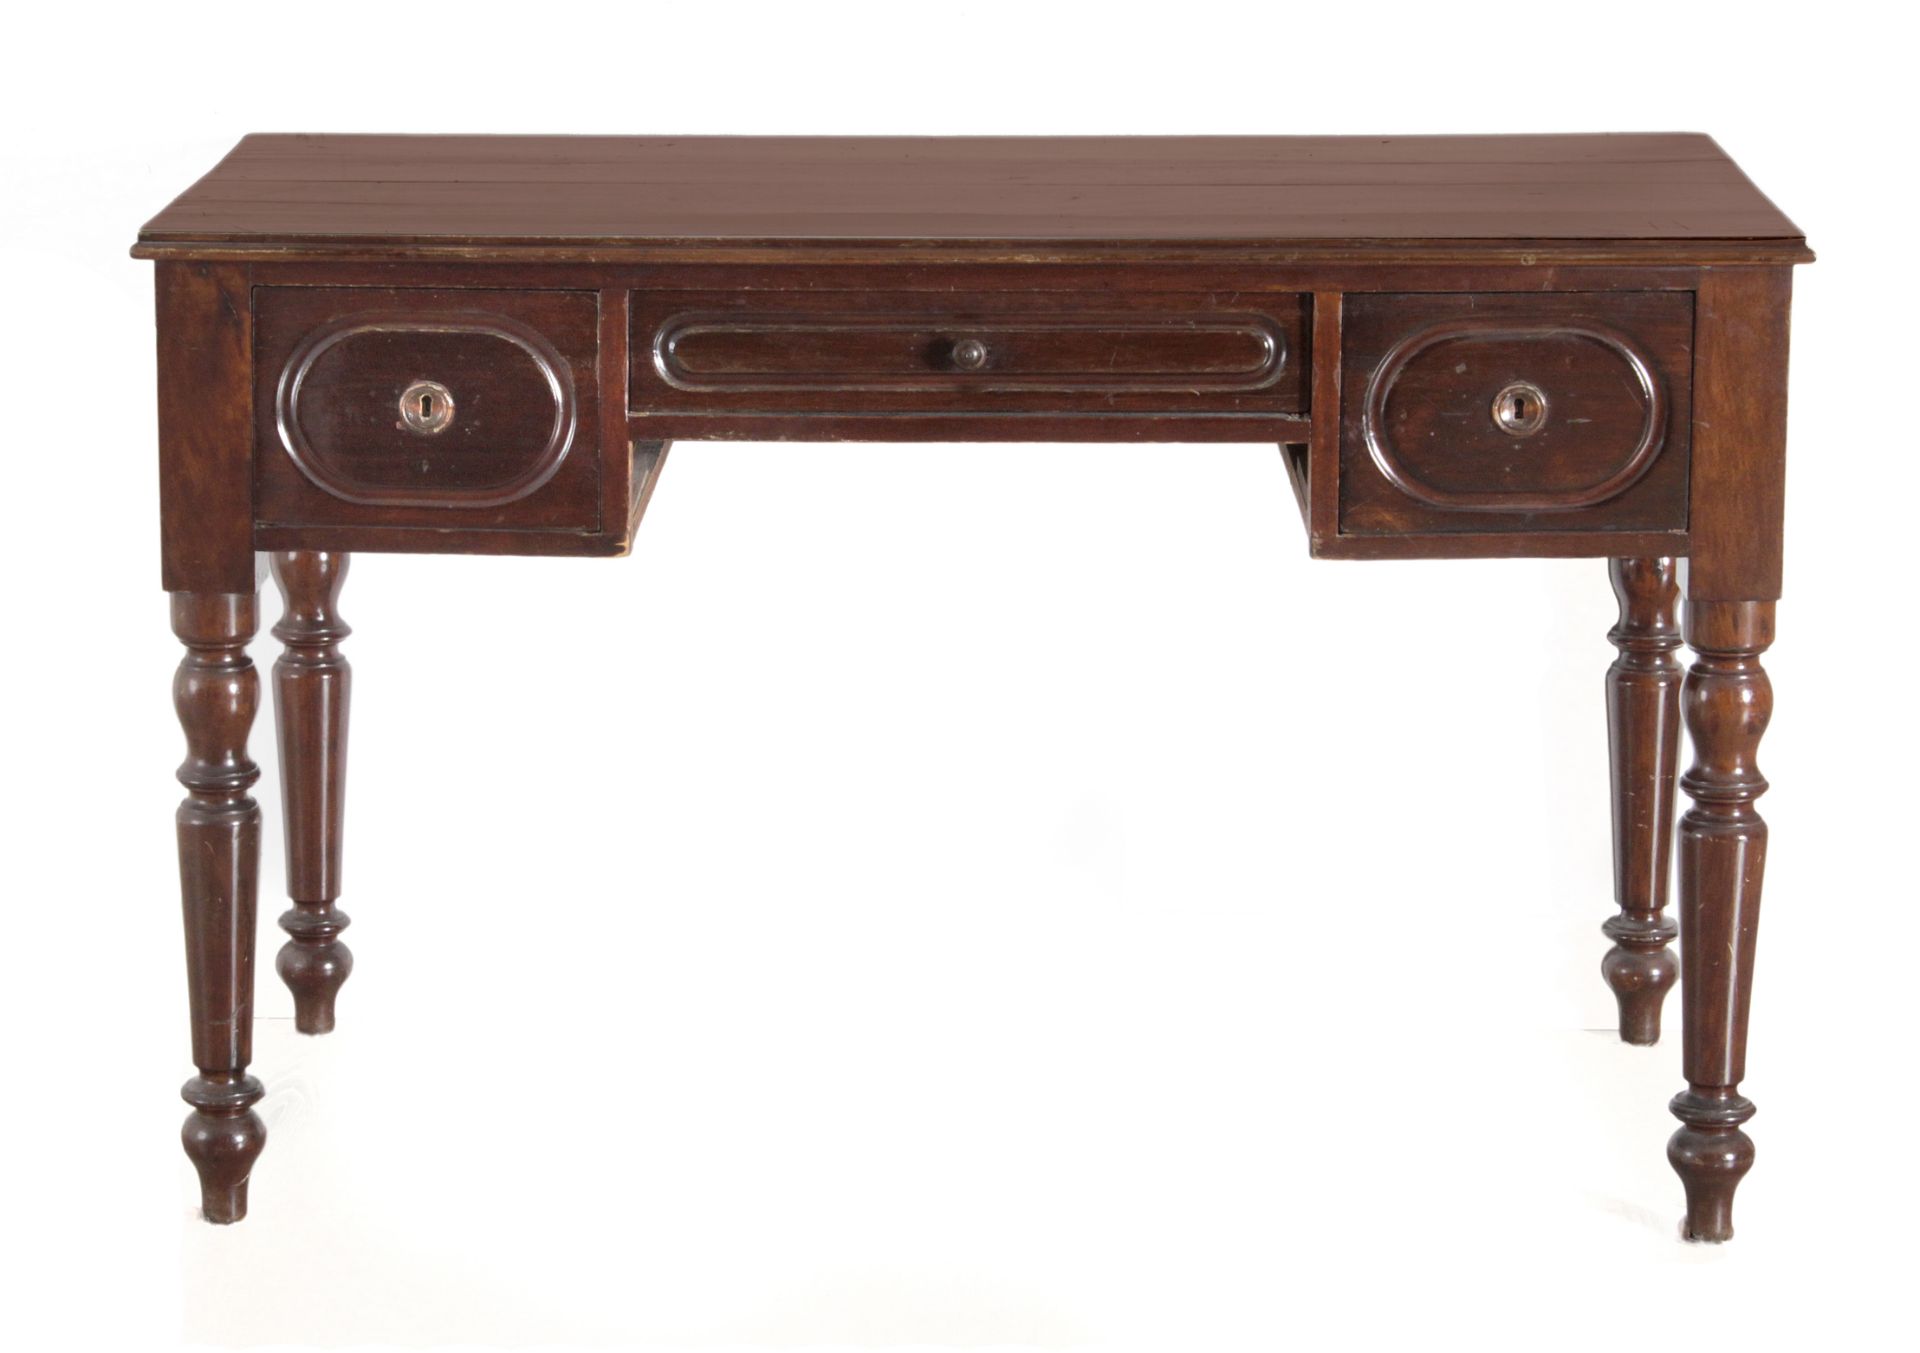 A 19th century Spanish Isabelino period mahogany writing desk - Image 2 of 5